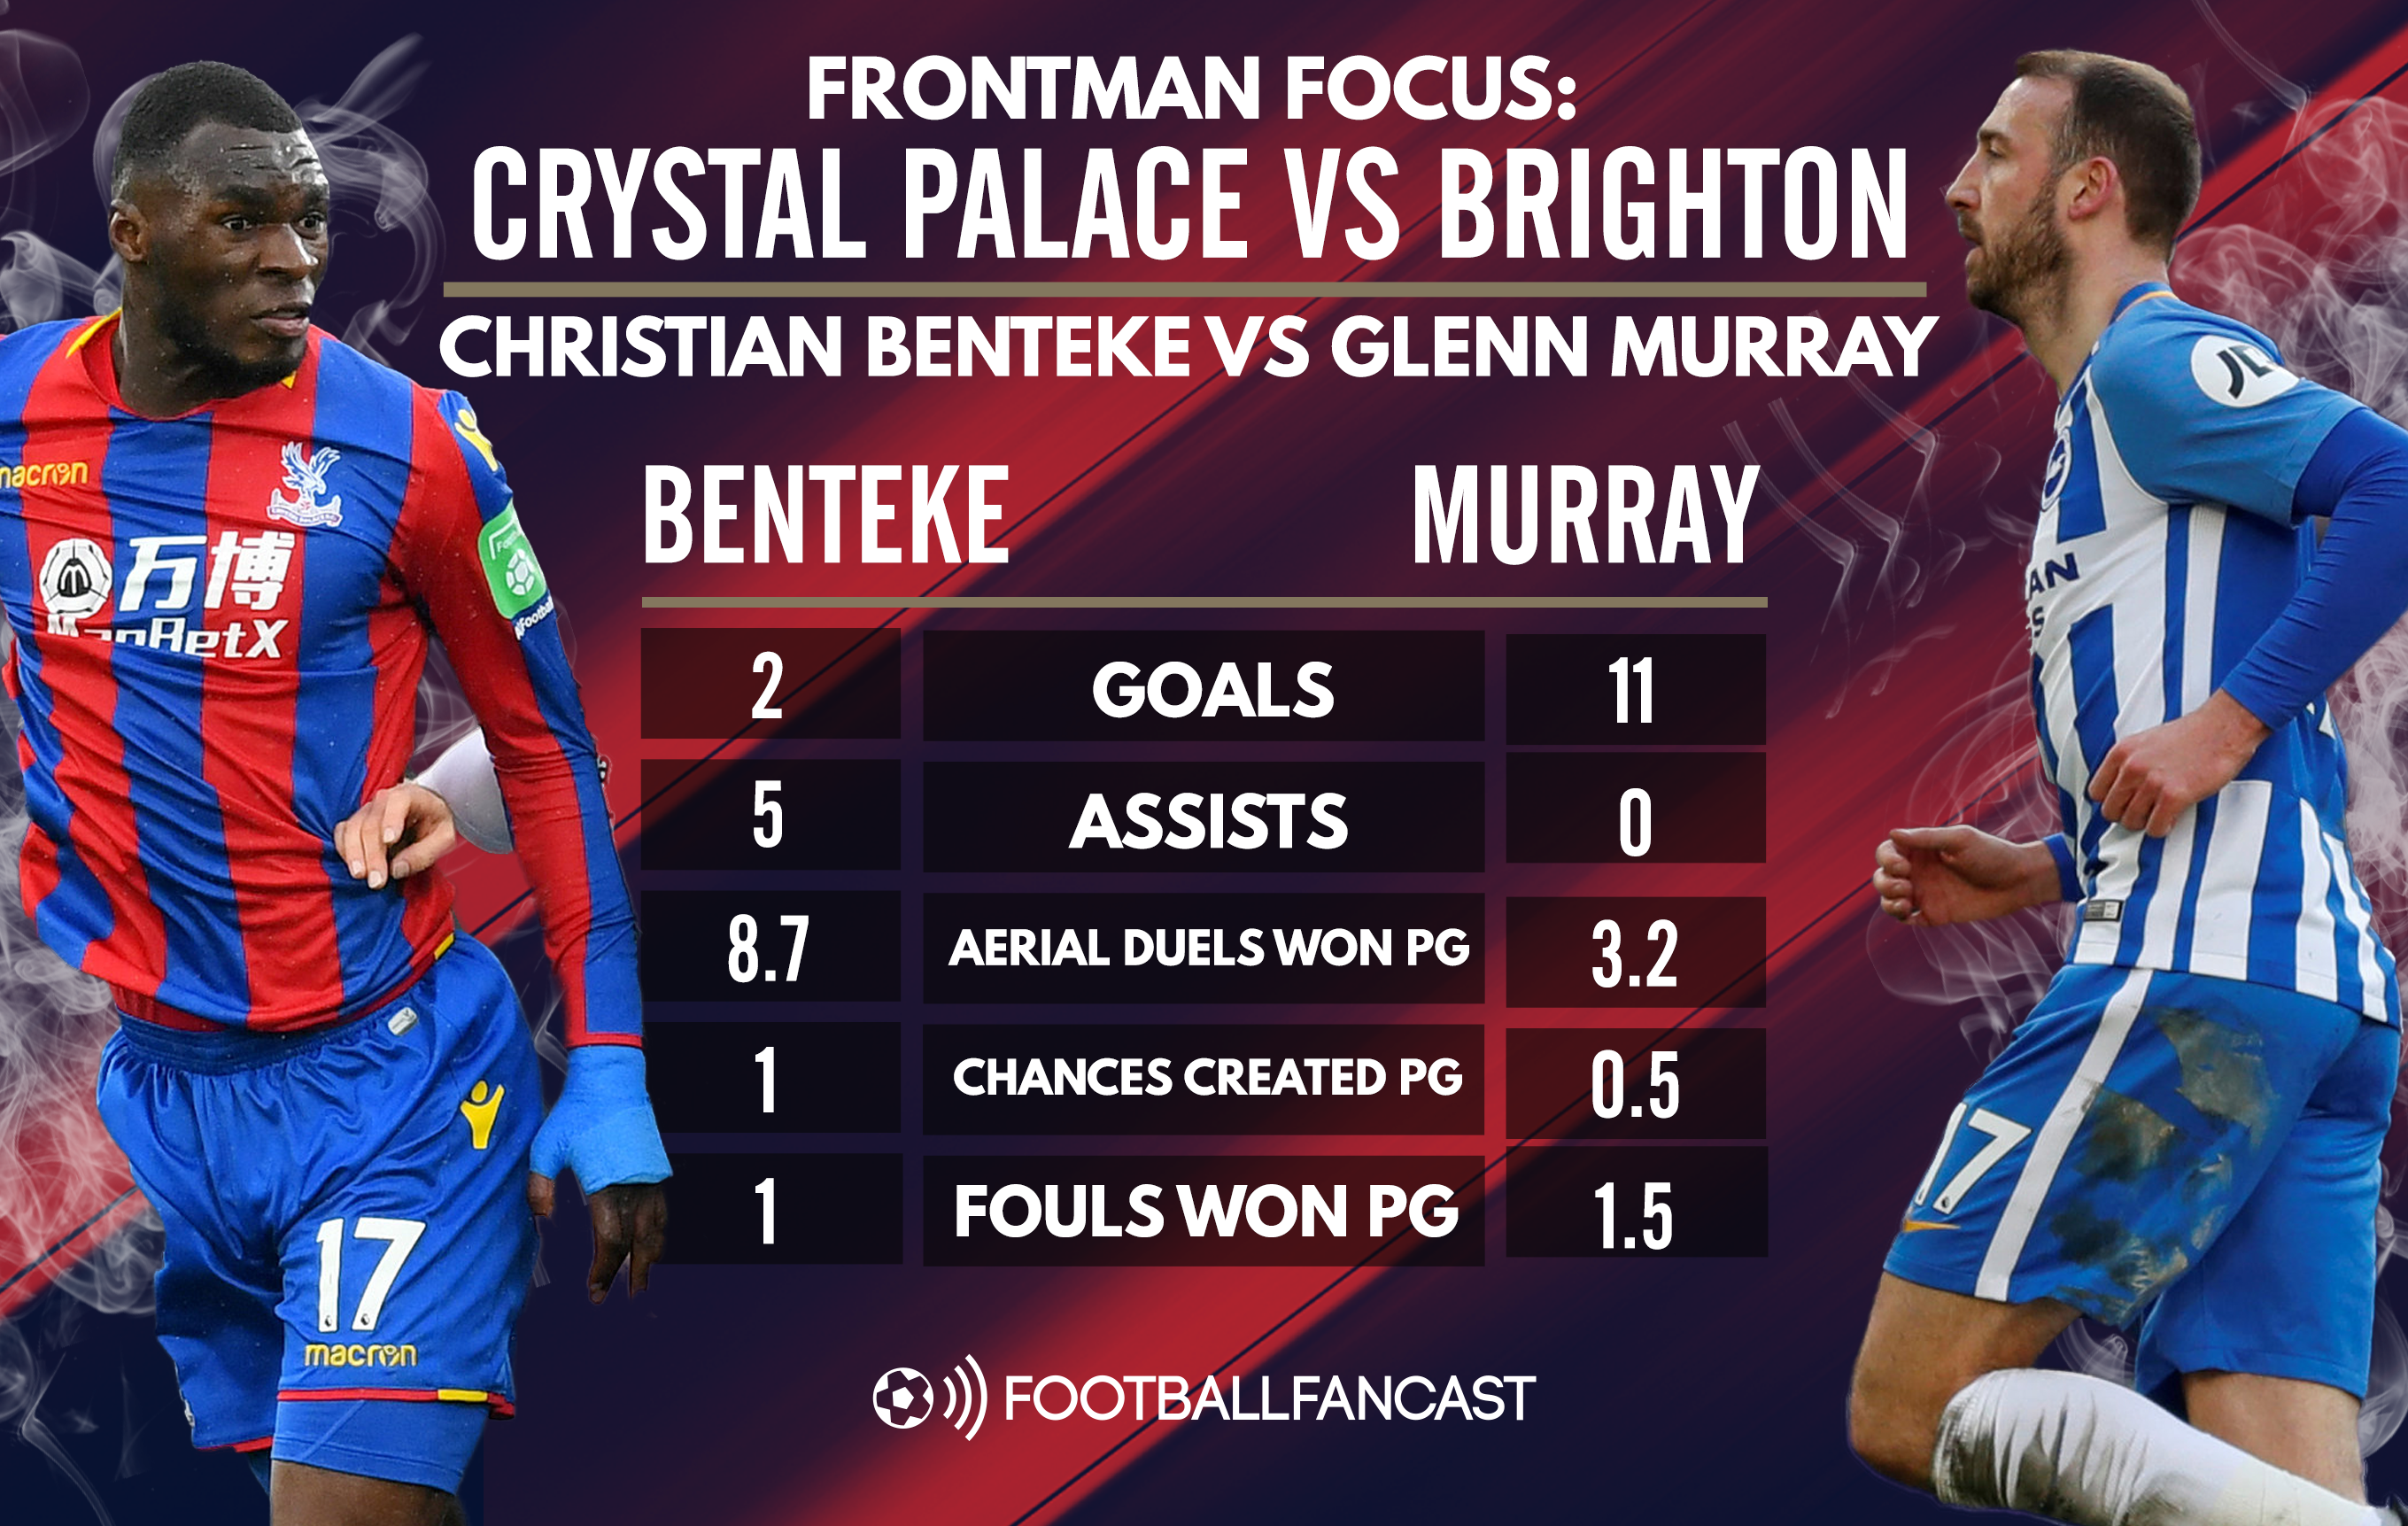 Christian Benteke vs Glenn Murray - form this season